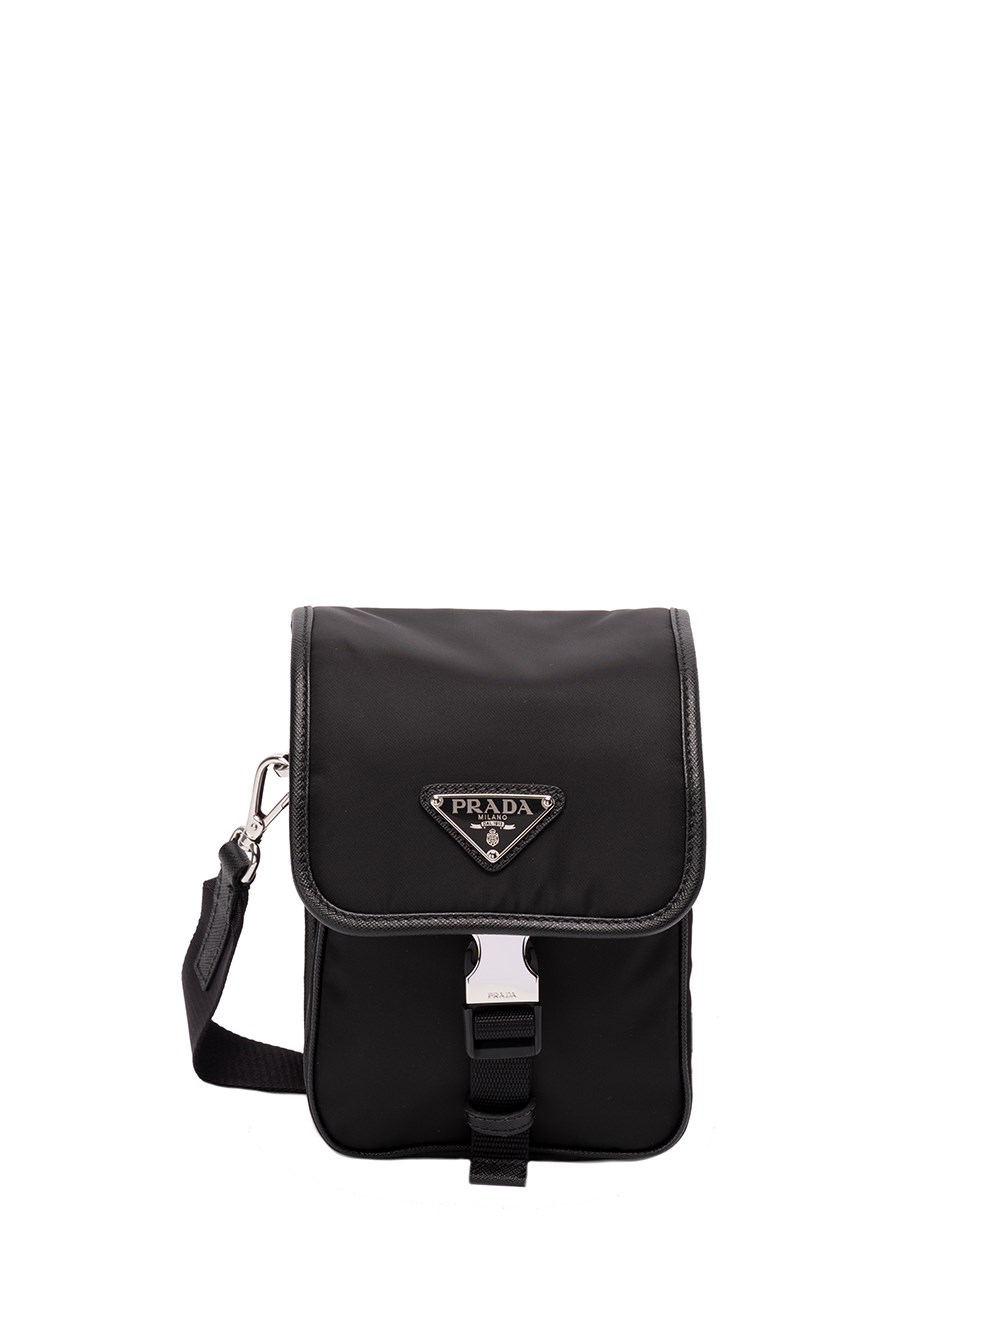 Prada `re-nylon` And Saffiano Leather Shoulder Bag In Black  